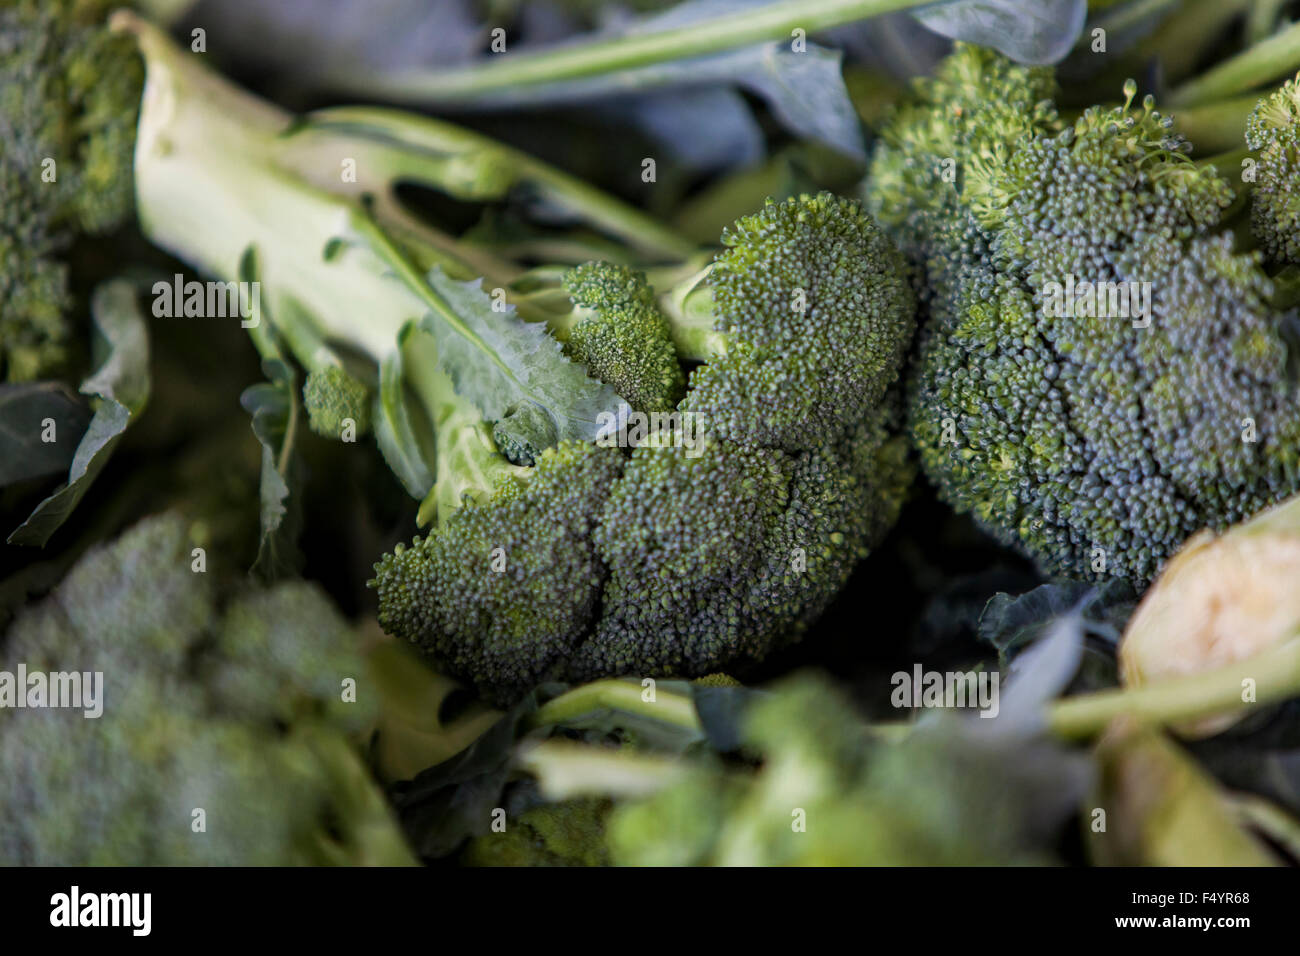 Broccoli vegetable Stock Photo